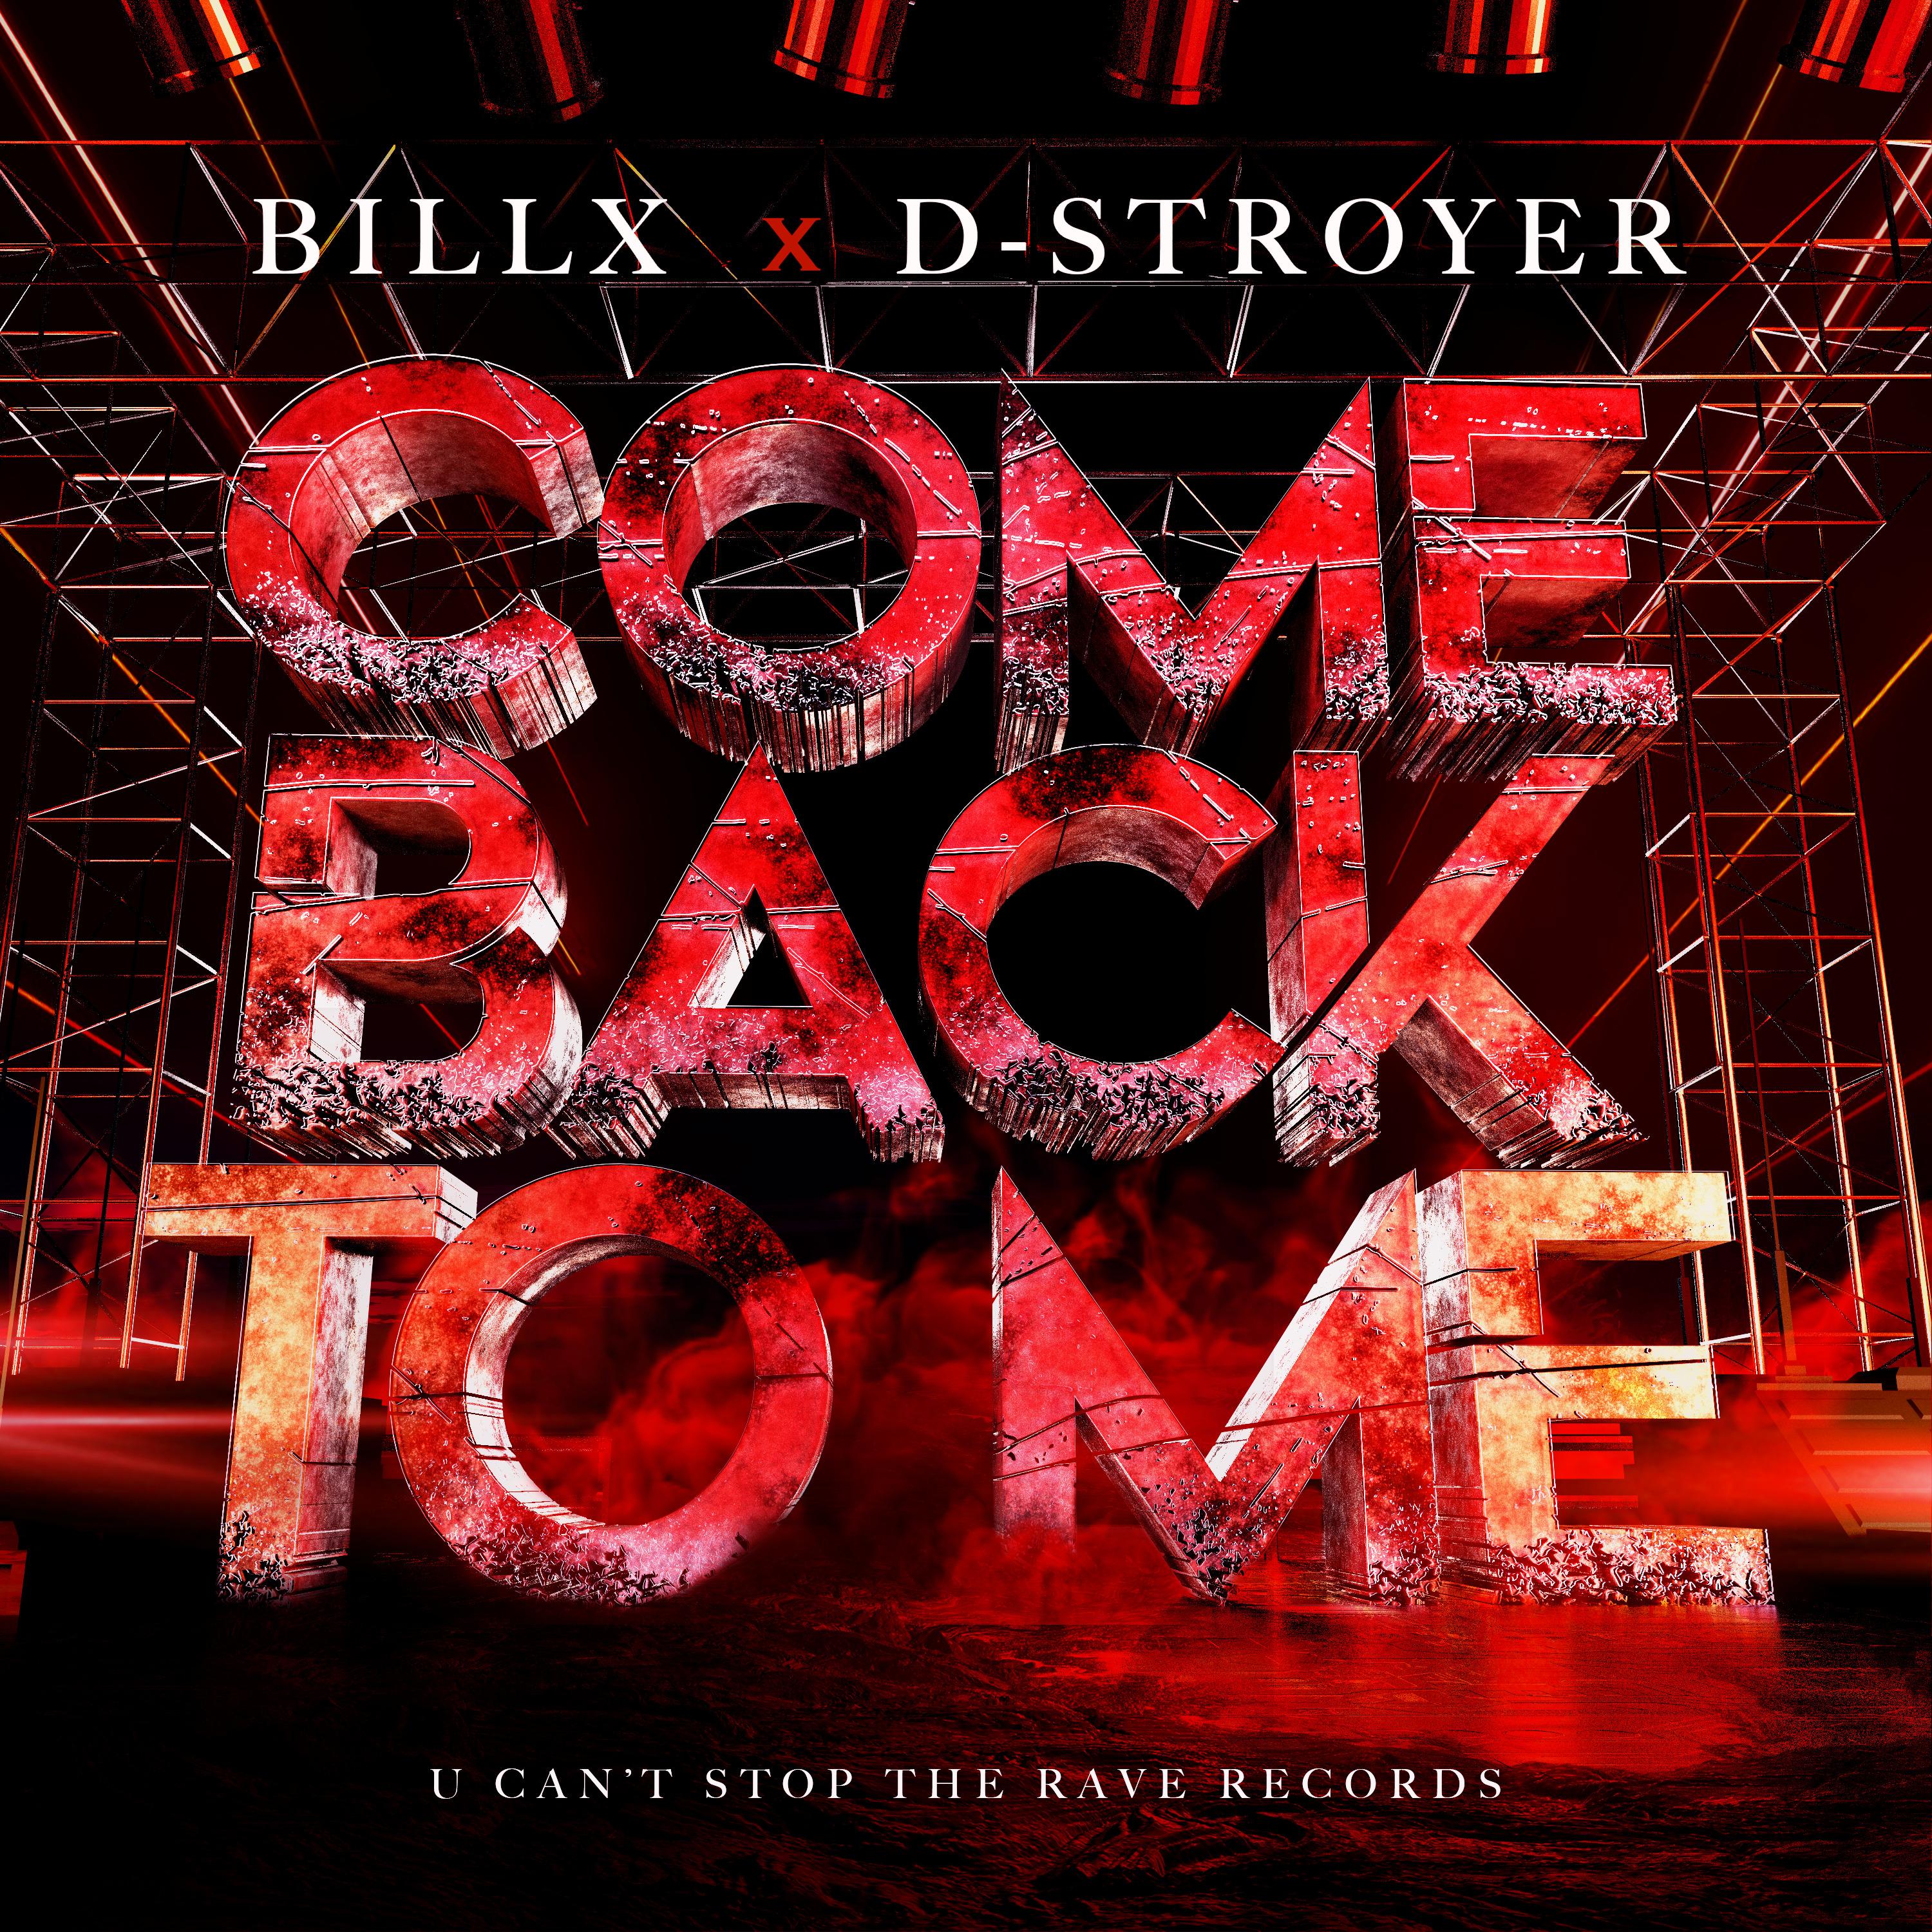 Billx - Come back to me